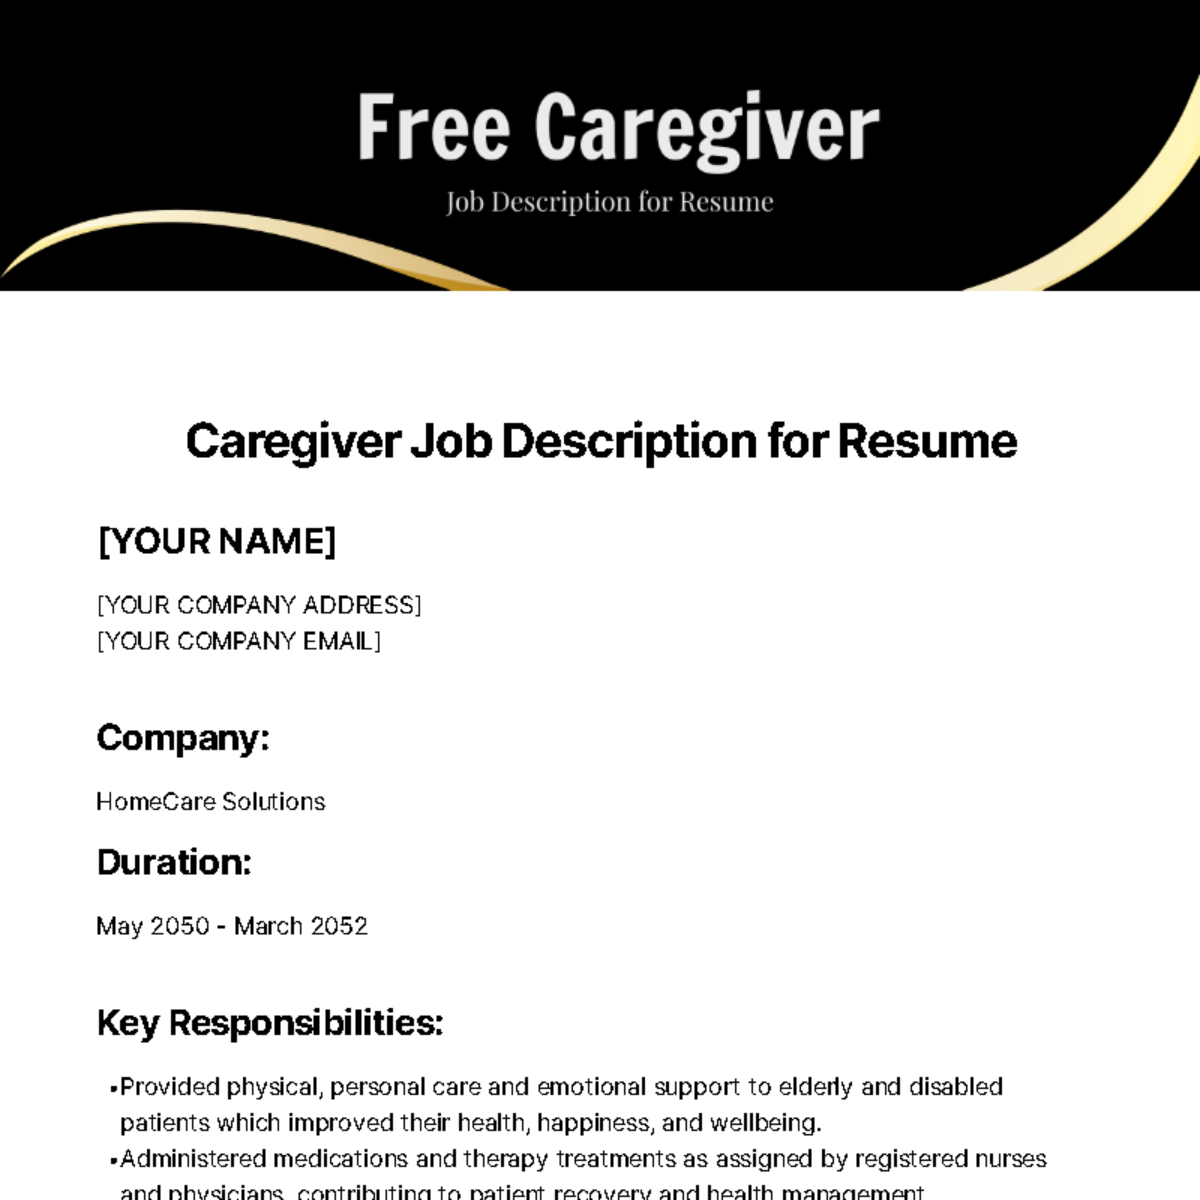 Free Caregiver Job Description for Resume Template